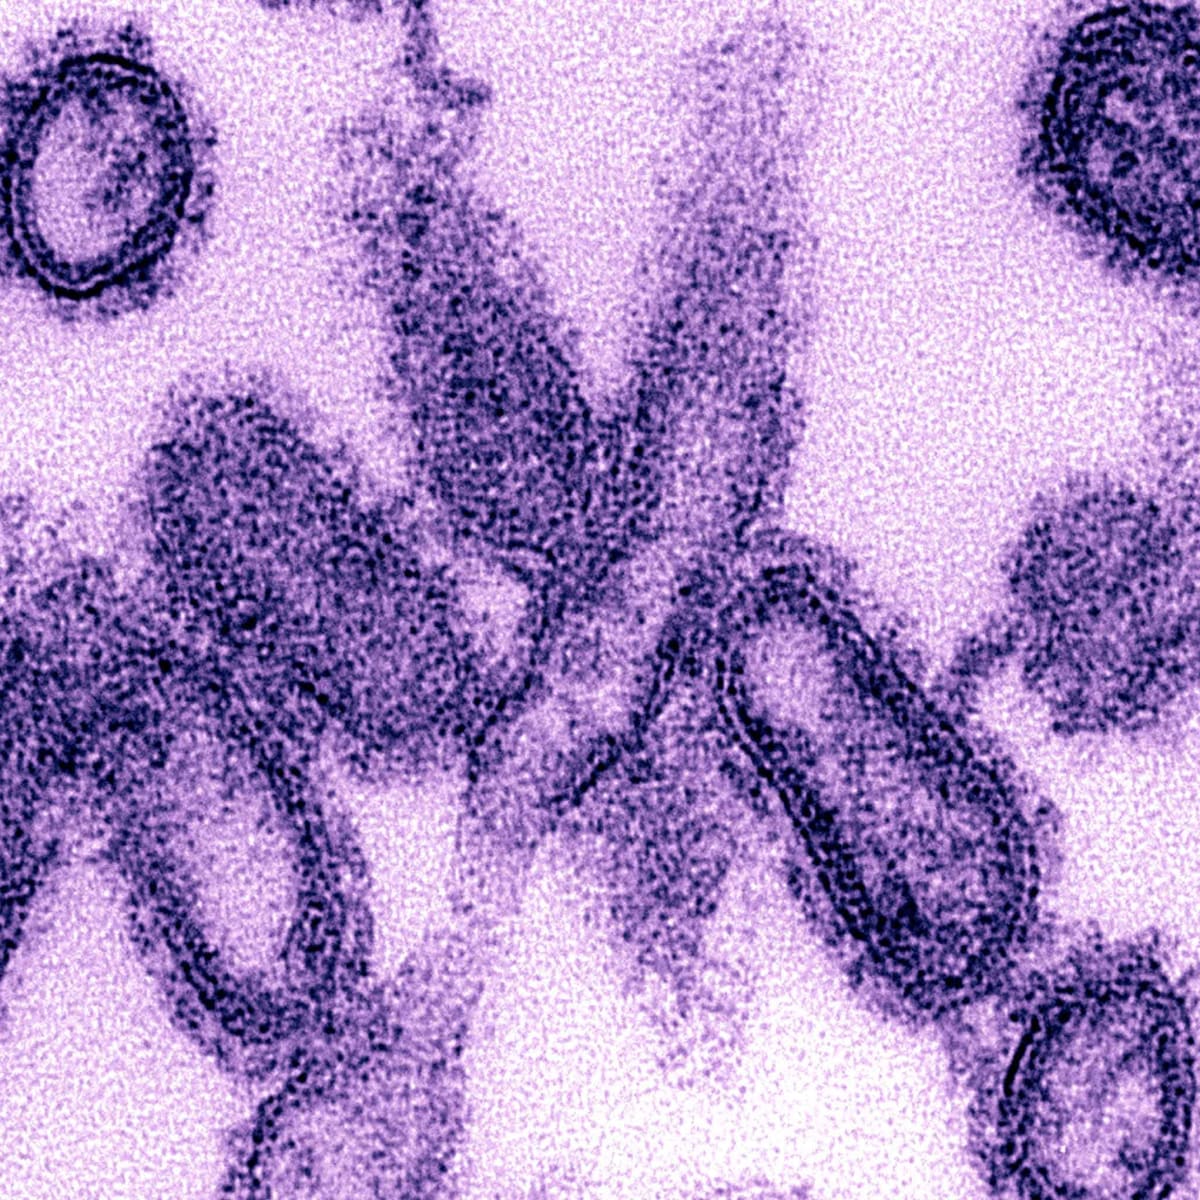 Spanish Flu, How It Began & Ended